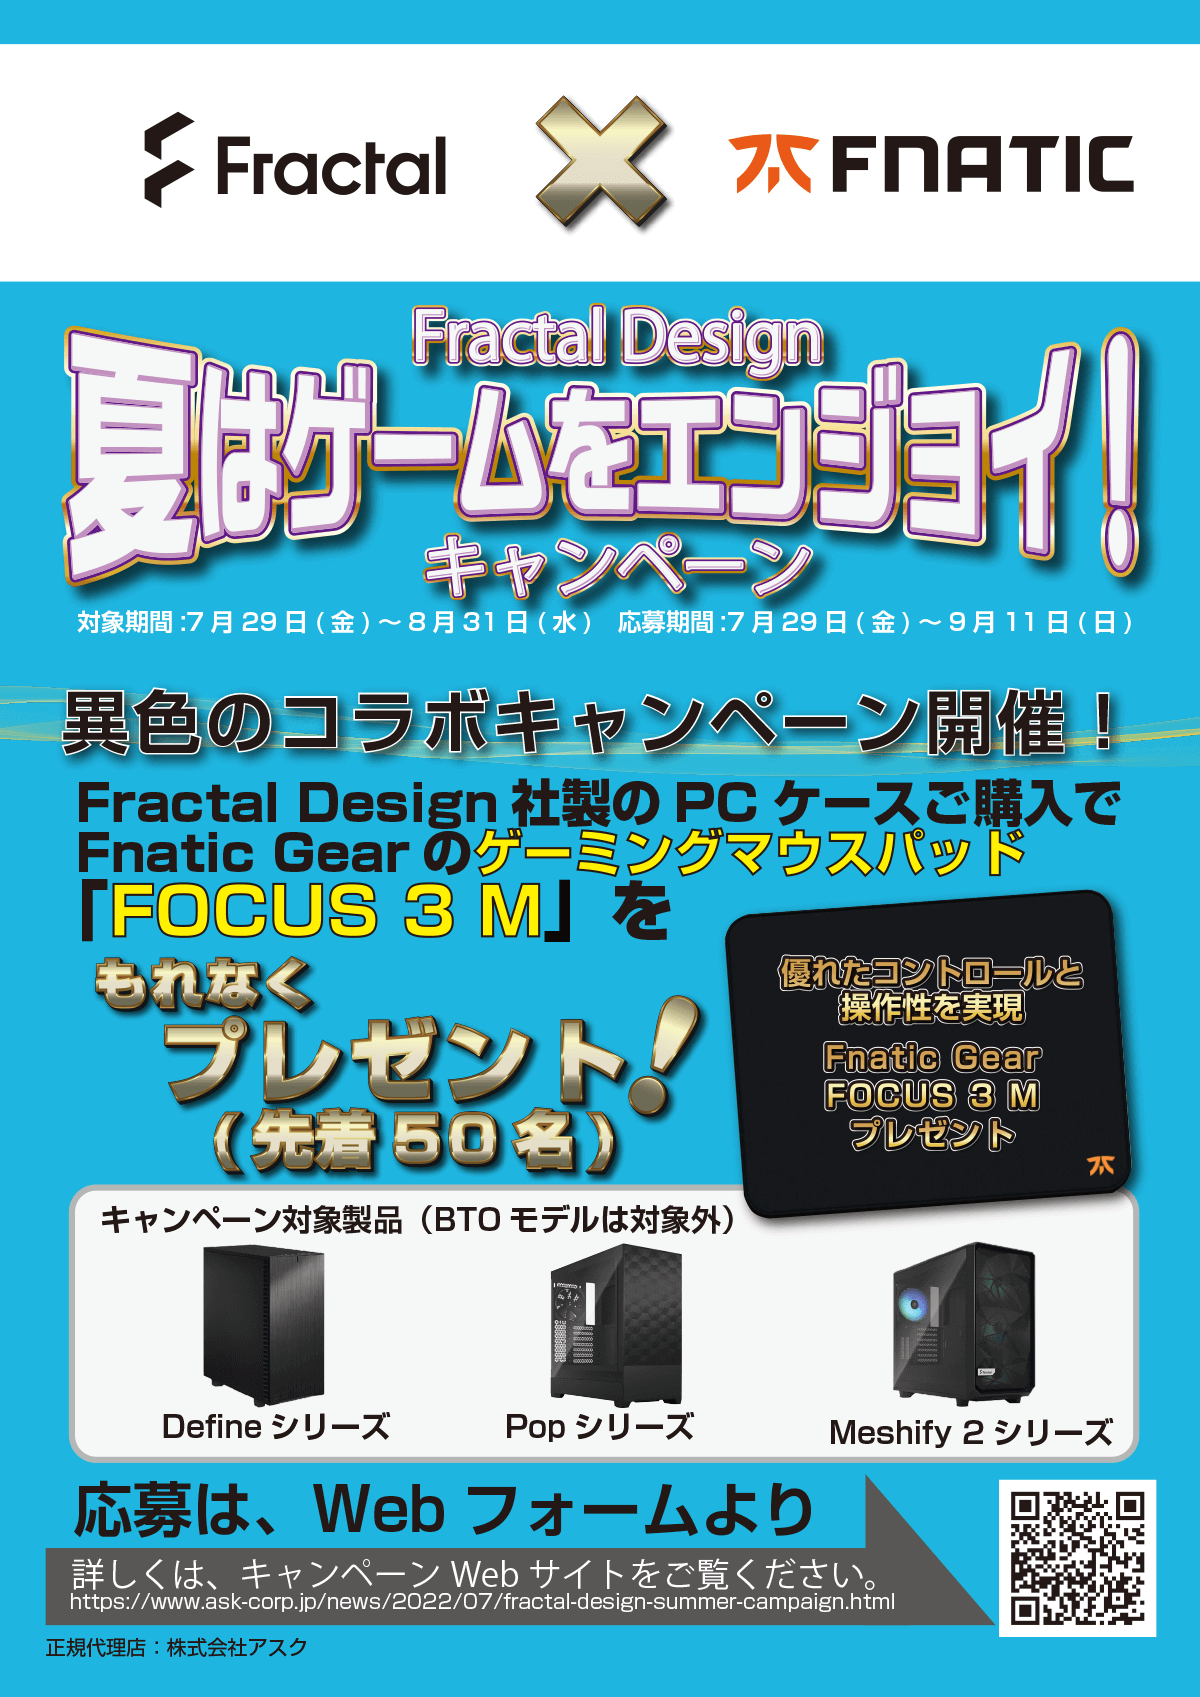 Fractal Design 夏はゲームをエンジョイ！キャンペーン